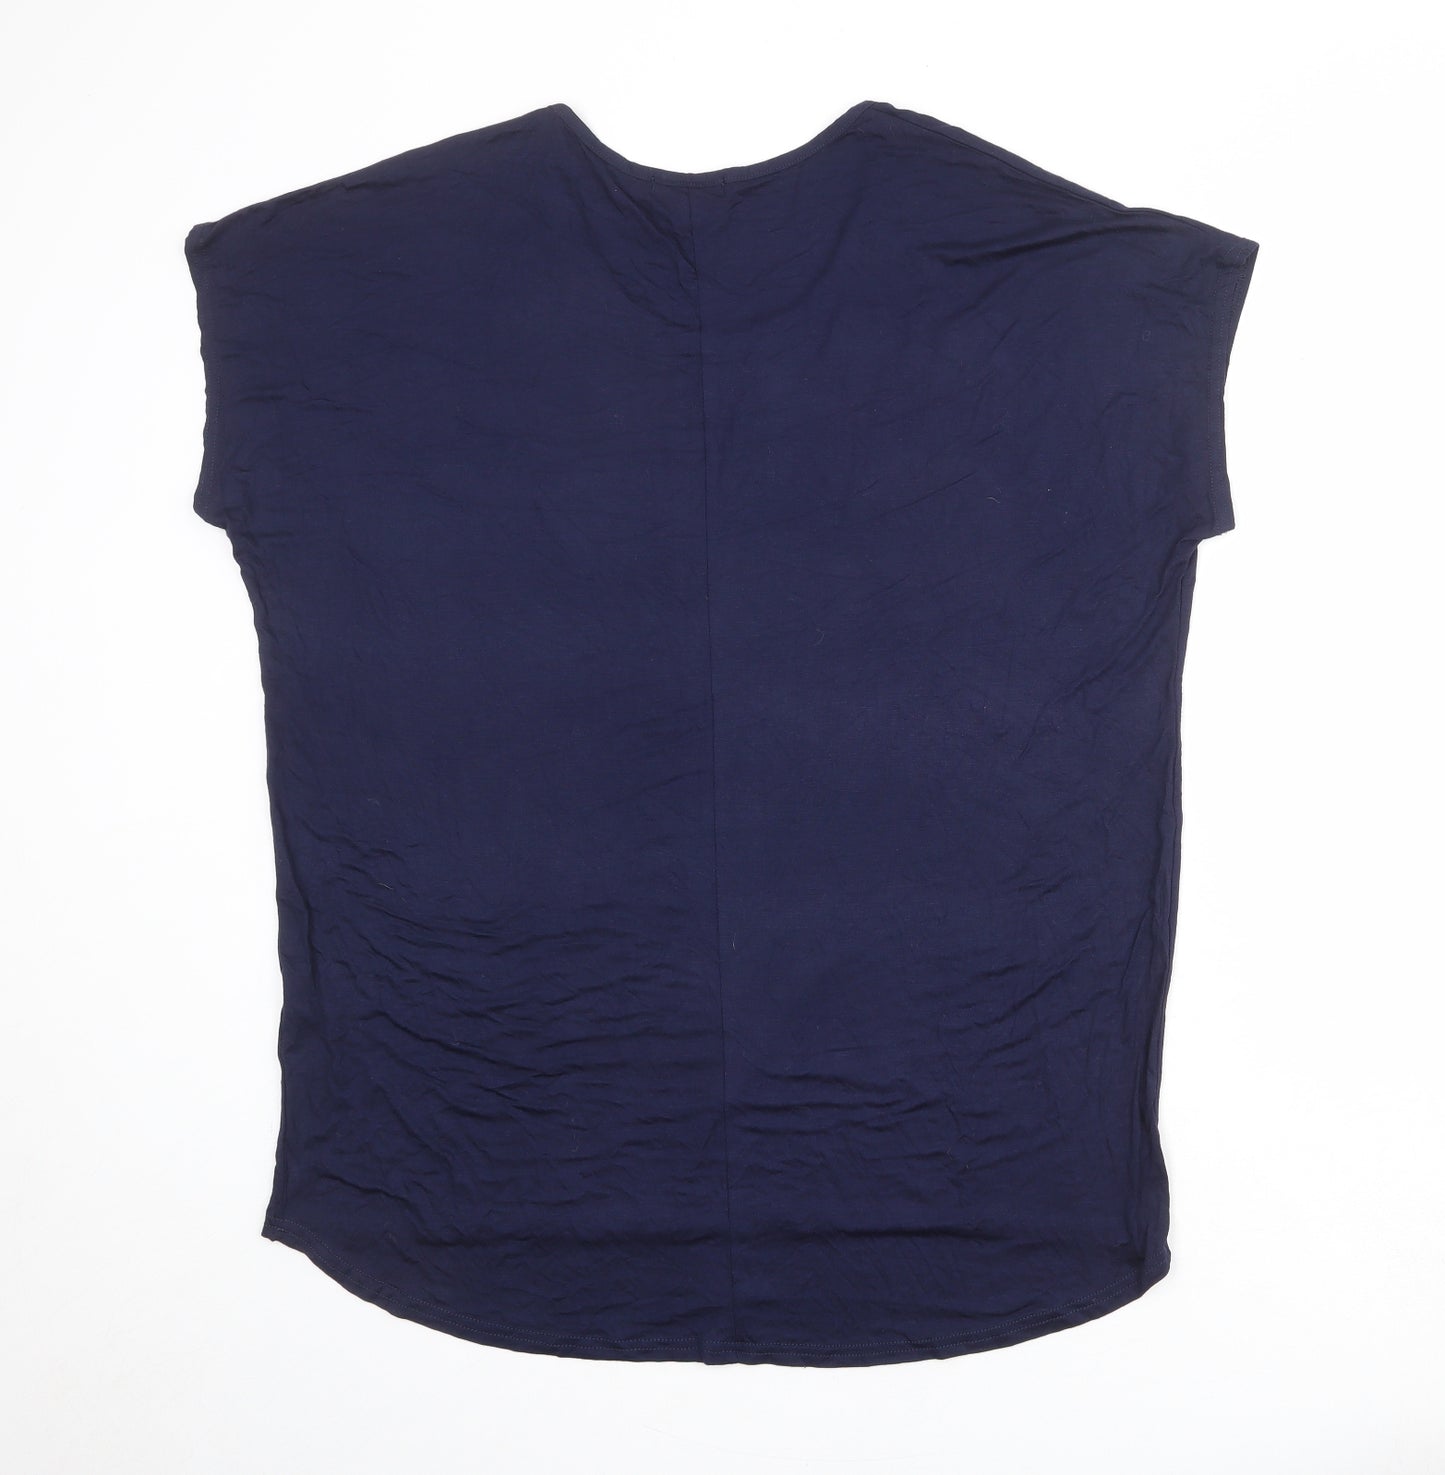 QED London Womens Blue Viscose Basic T-Shirt Size S Round Neck - Size S-M